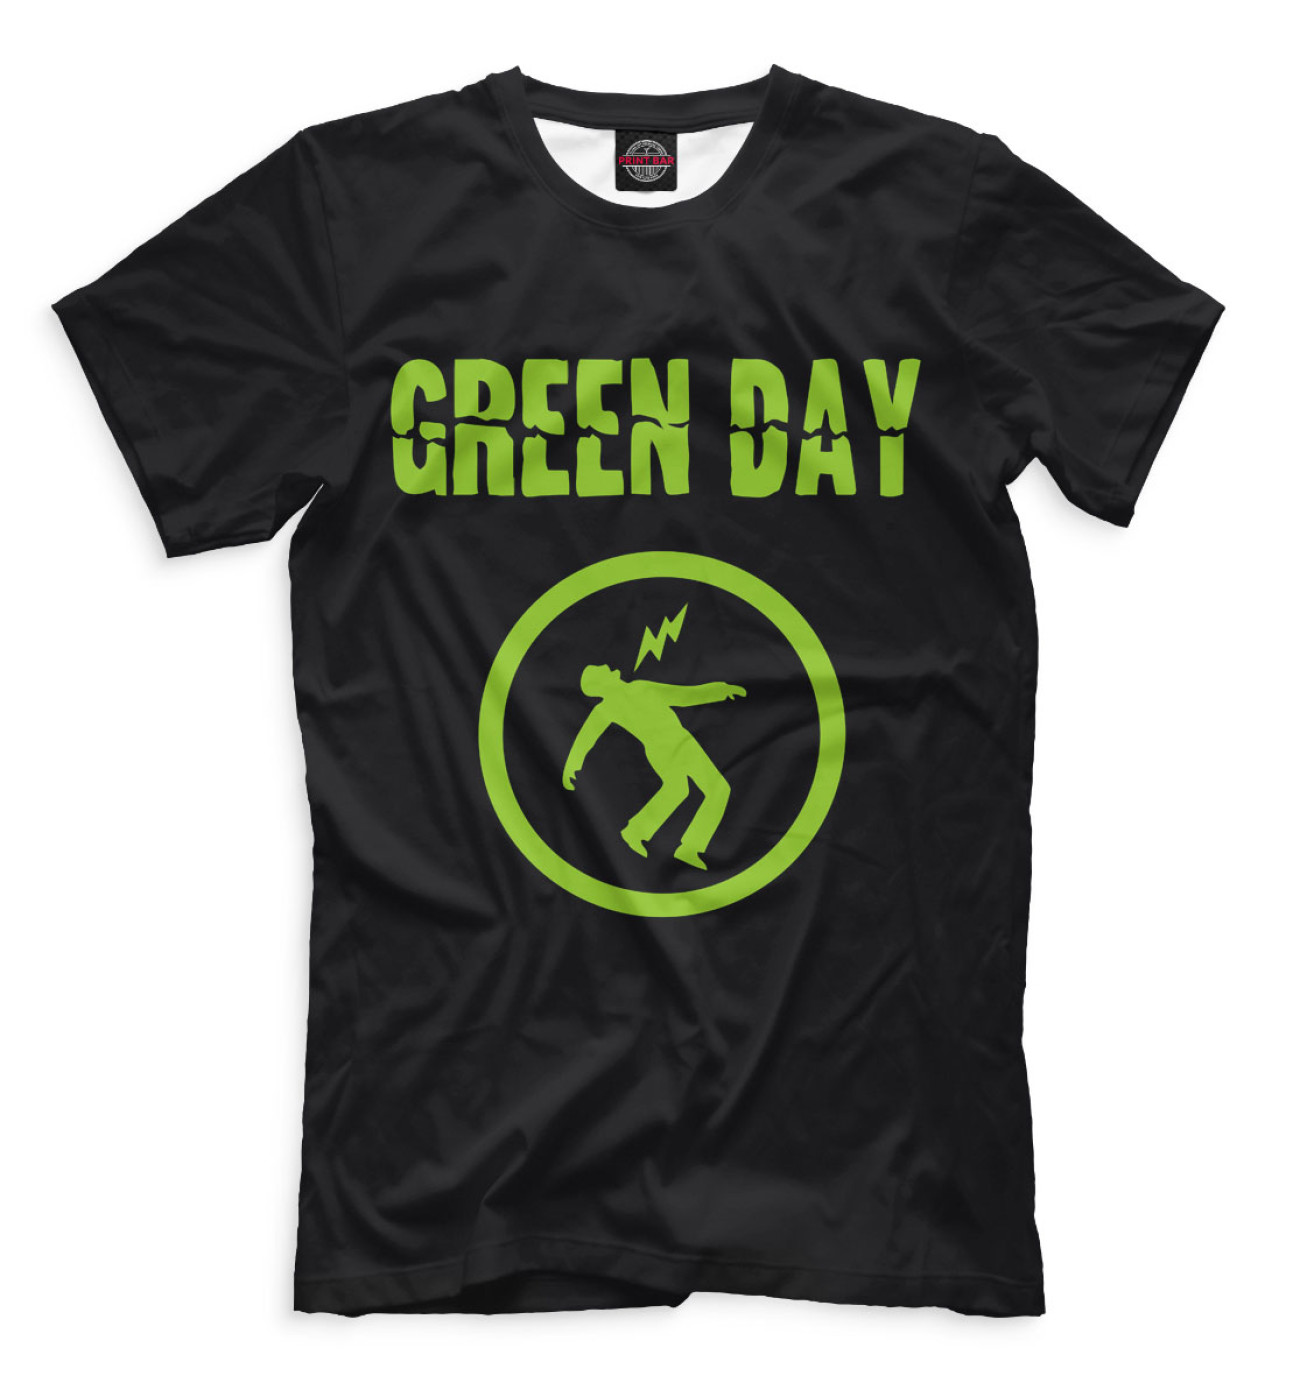 Мужская Футболка Green Day, артикул: GRE-843665-fut-2